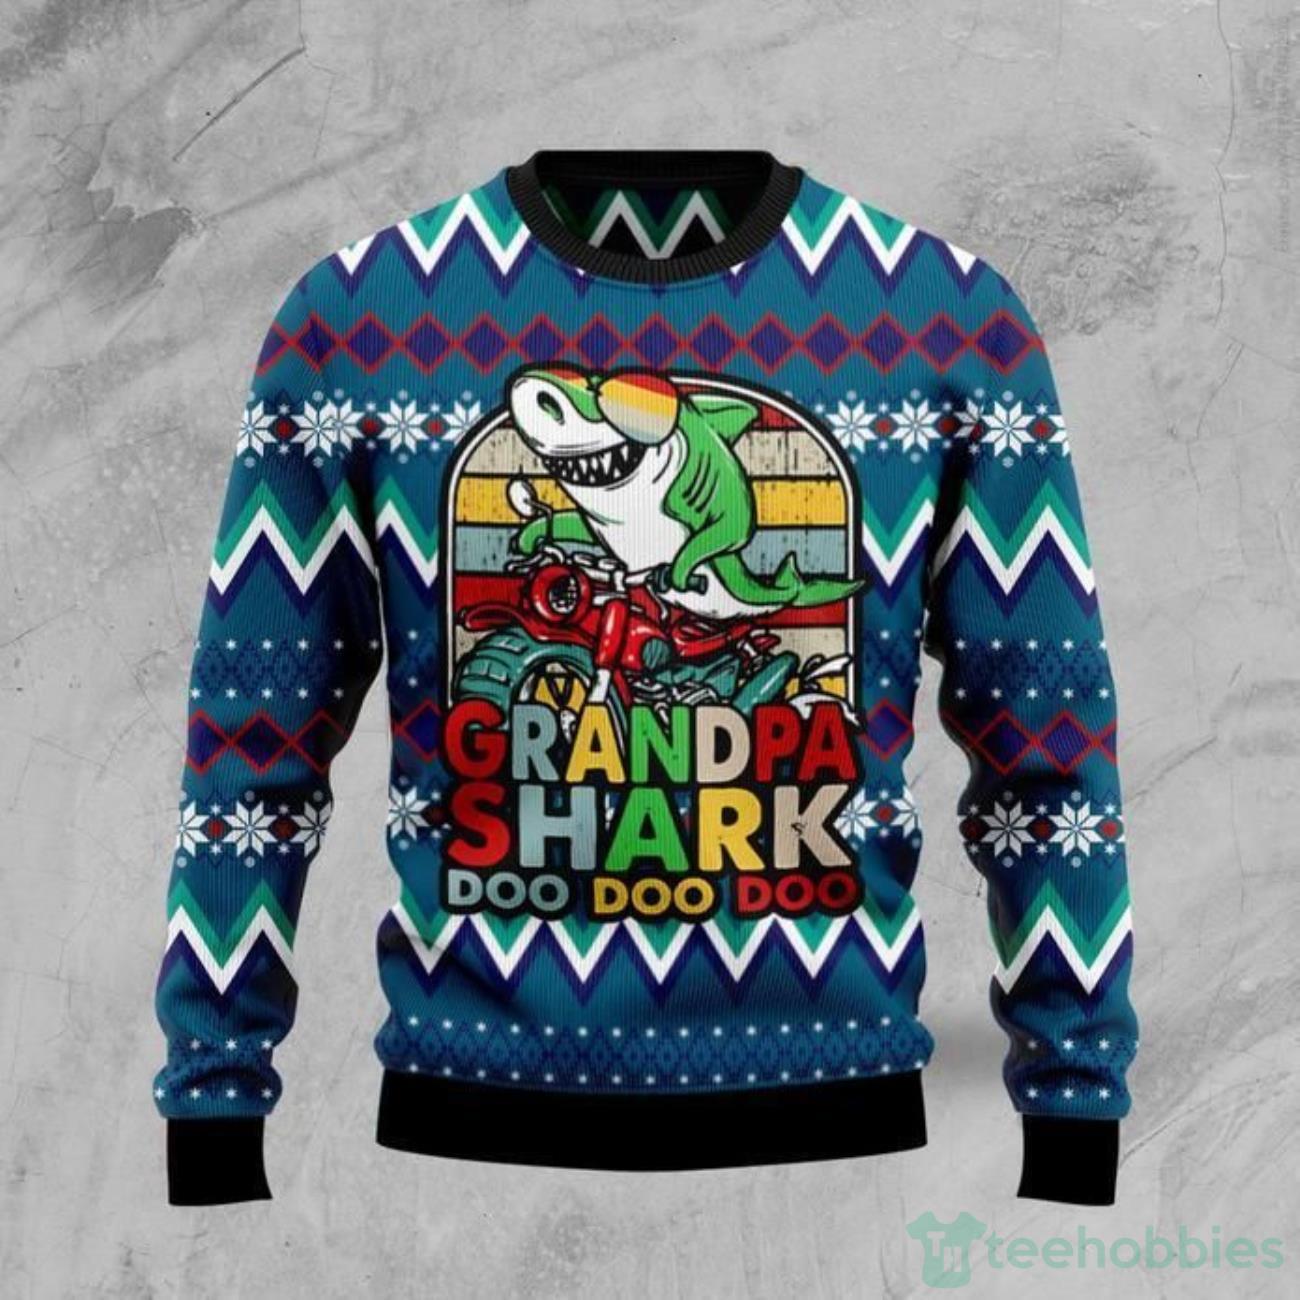 Grandpa Shark Dododo Ugly Christmas Sweater Product Photo 1